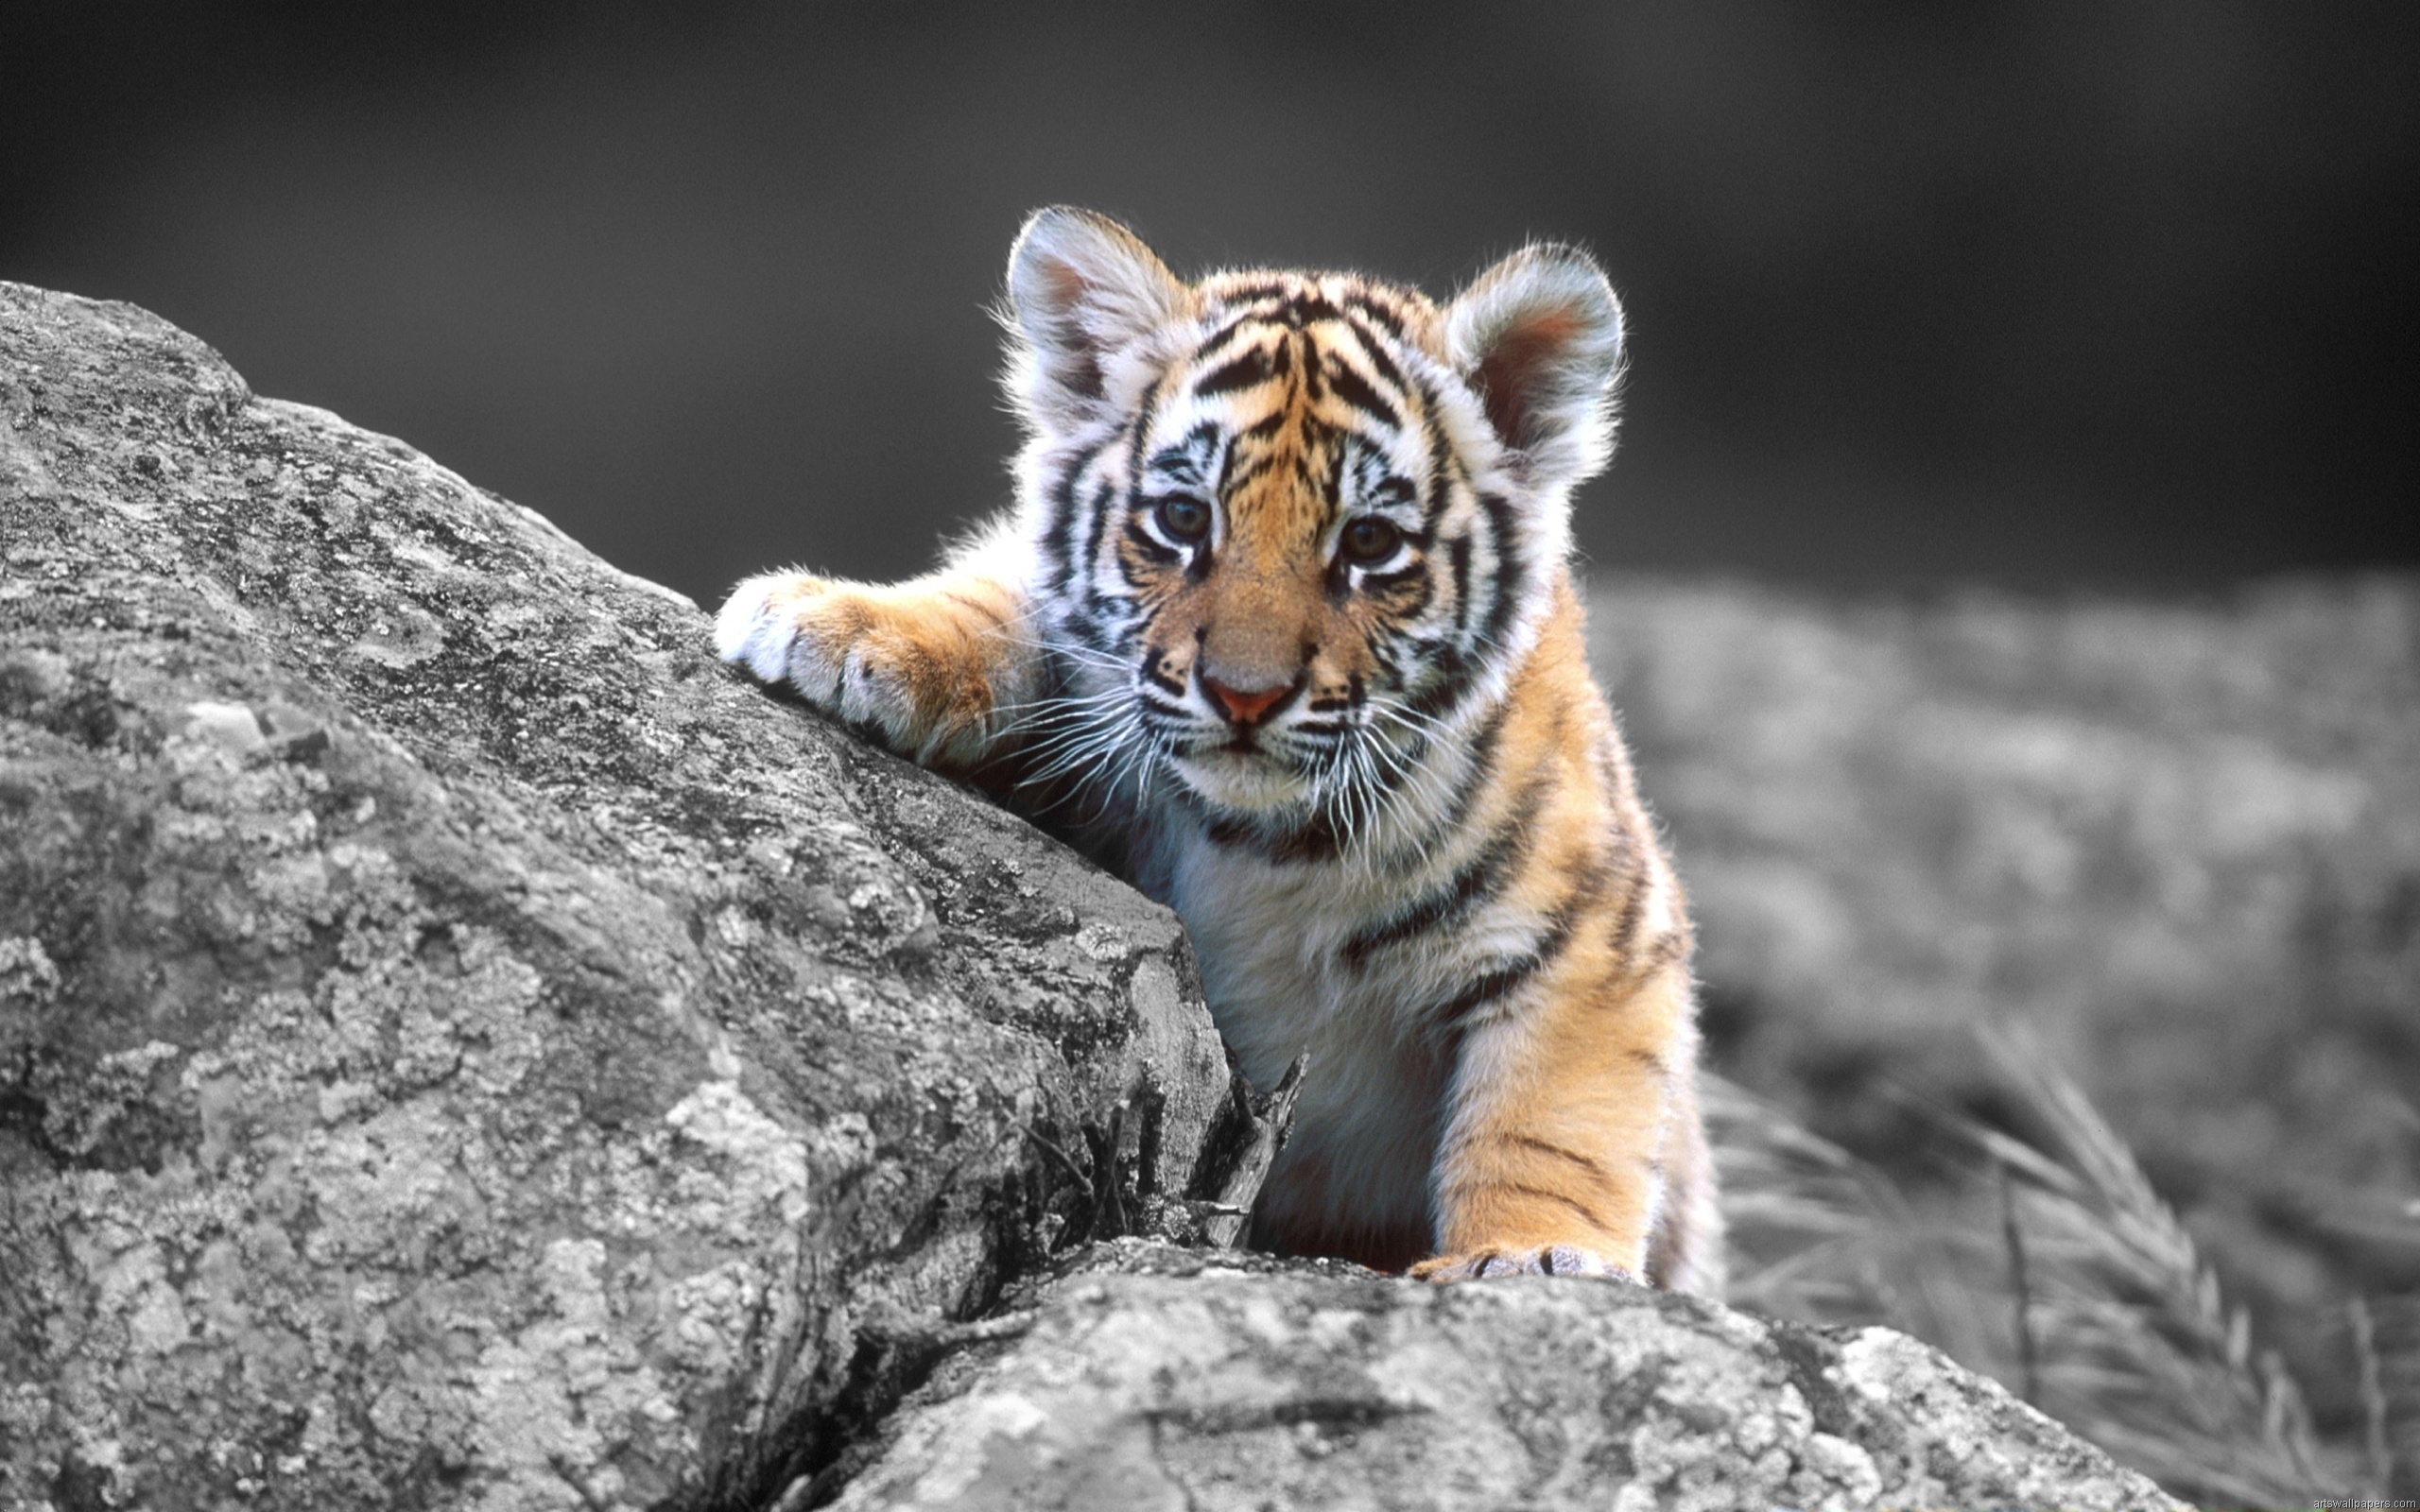 Tiger Image Wallpaper